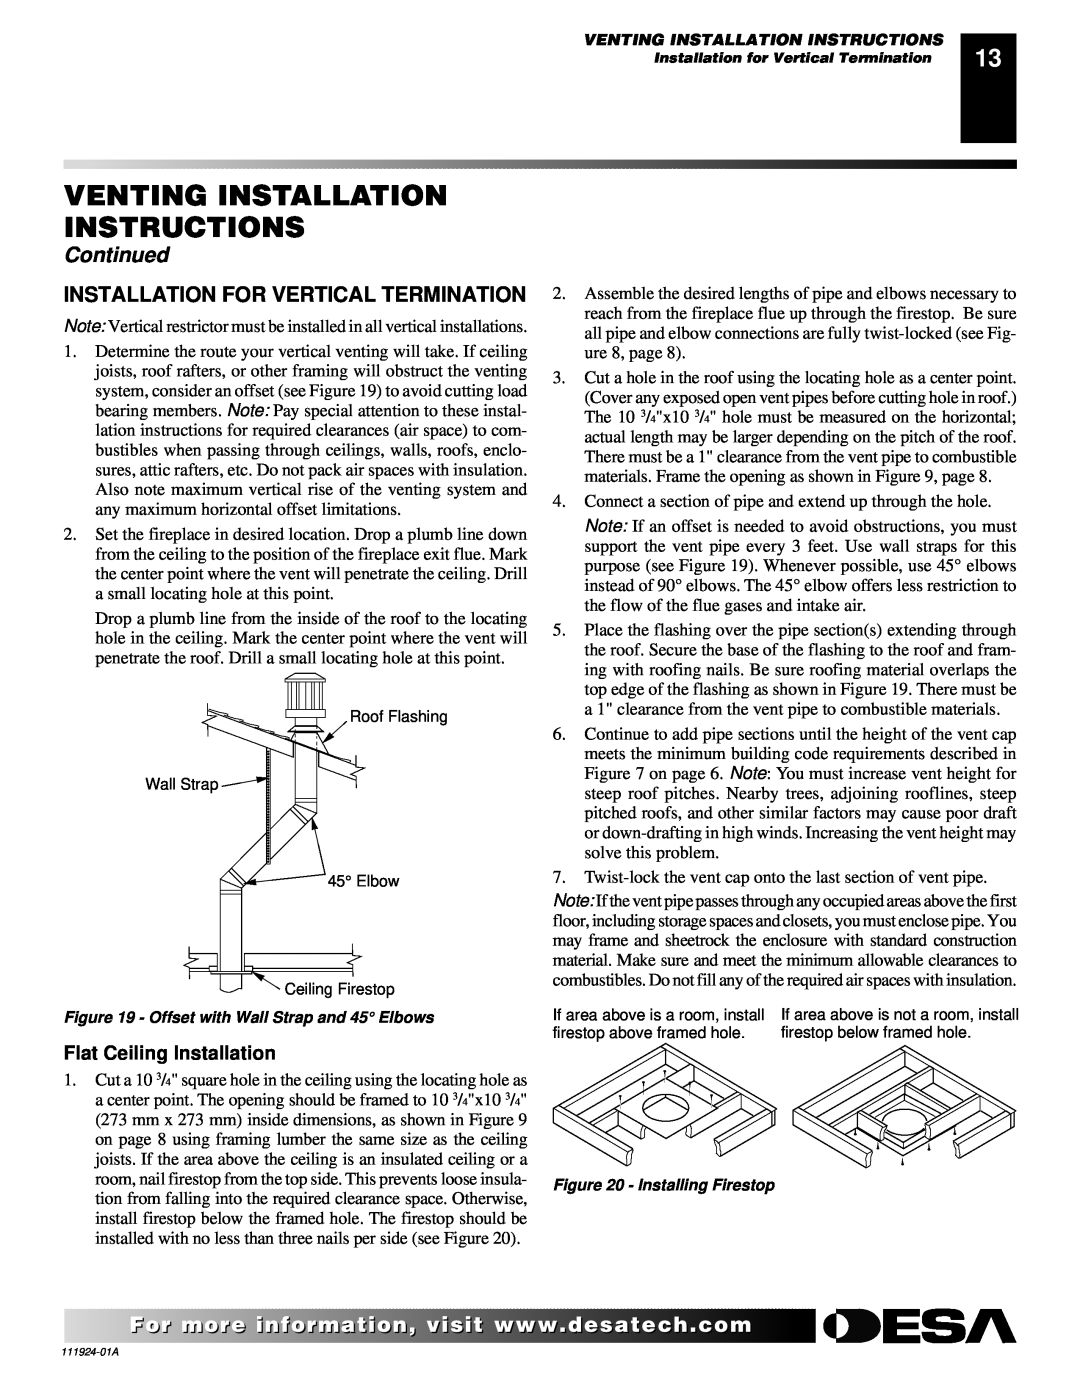 Desa K36EN Venting Installation Instructions, Continued, Installation For Vertical Termination, Flat Ceiling Installation 